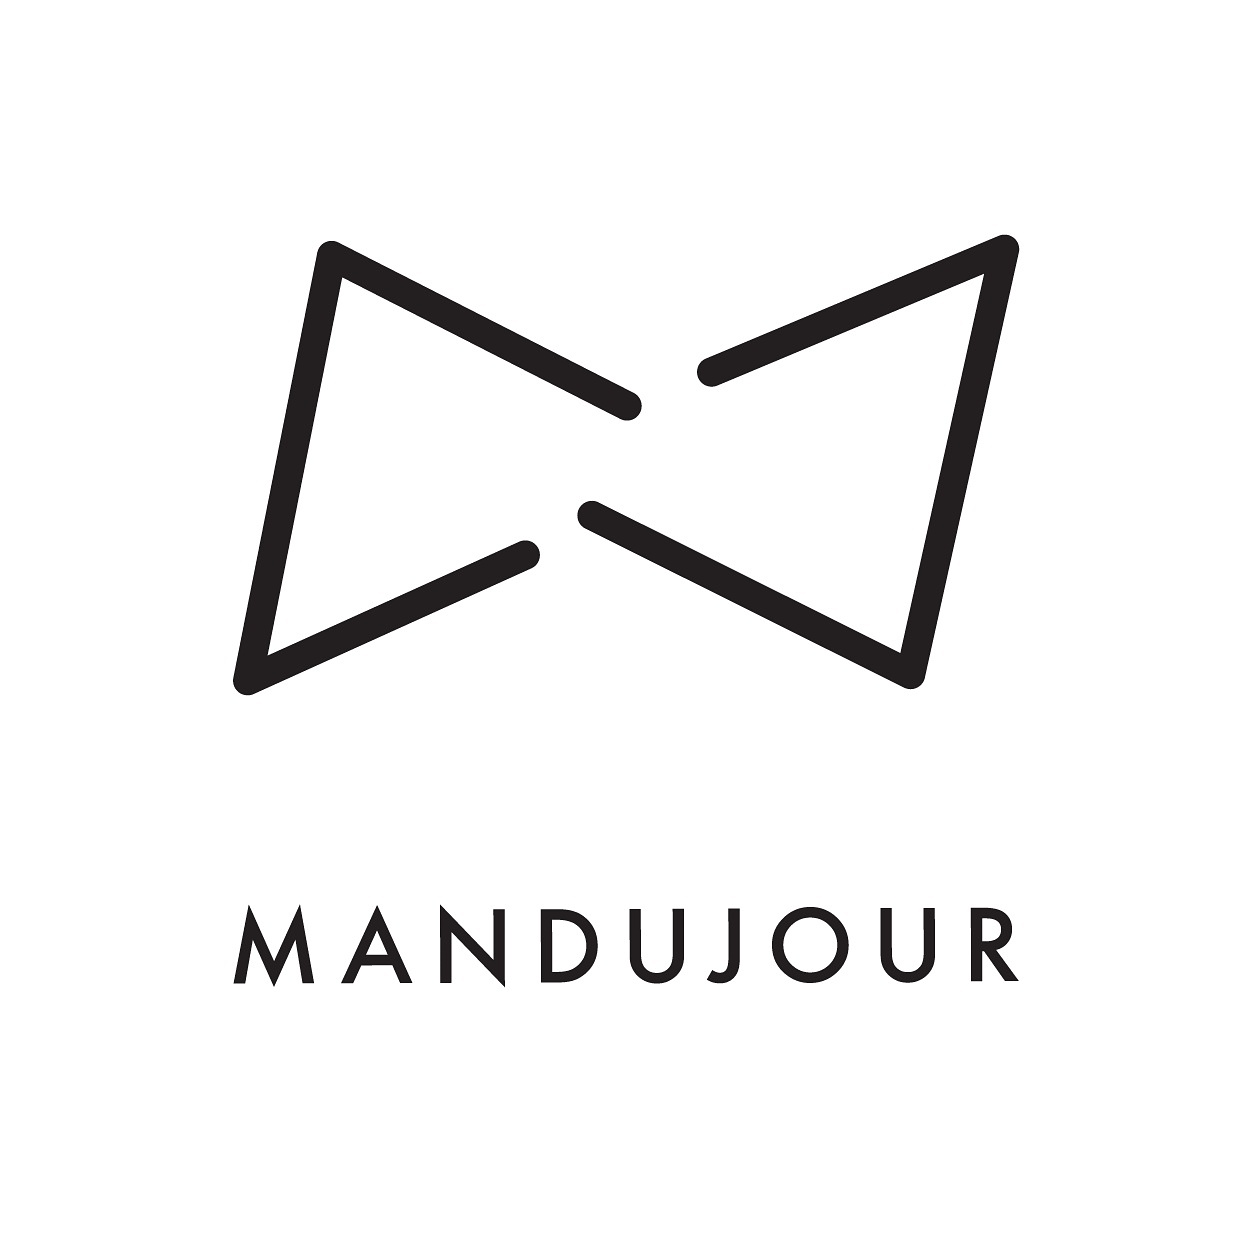 Mandujourshop Coupon Codes